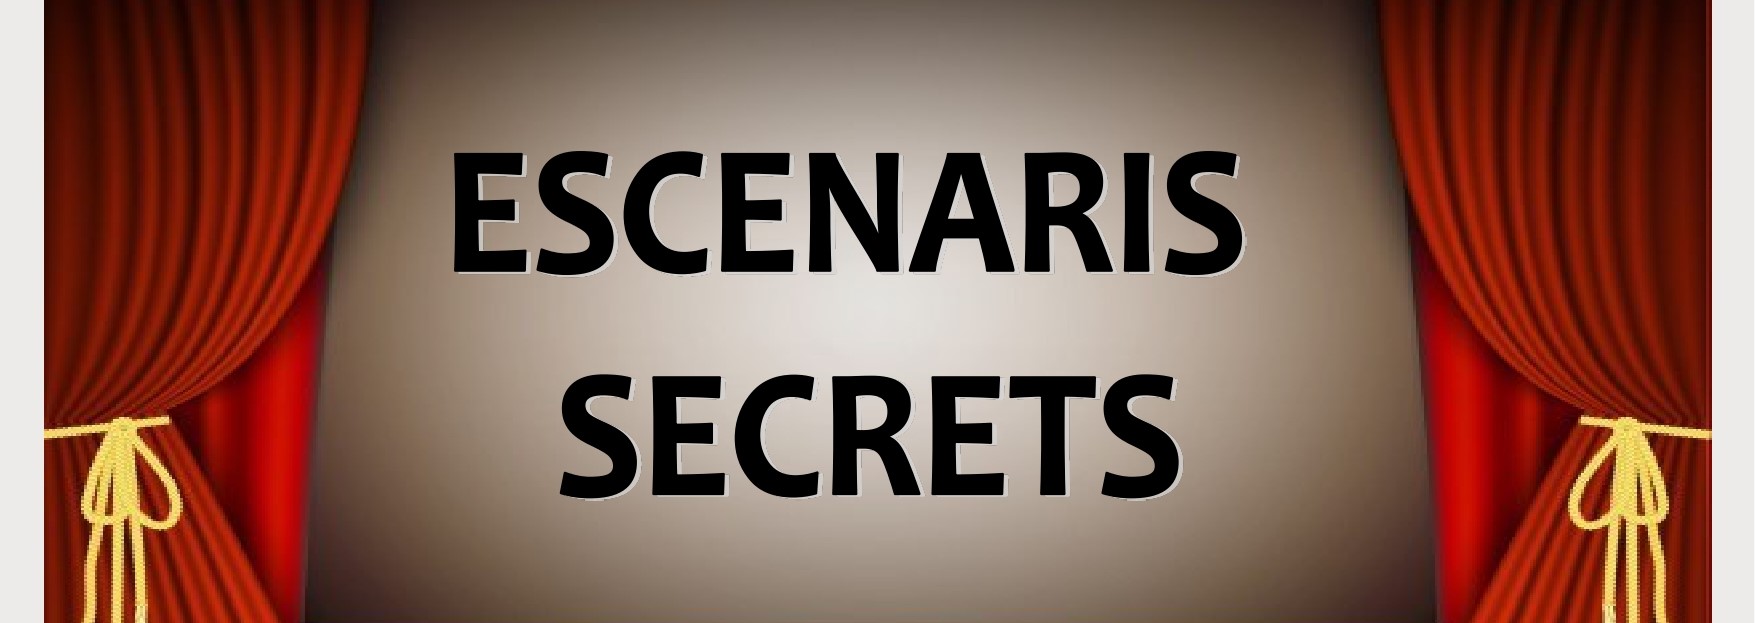 Escenaris Secrets ATR